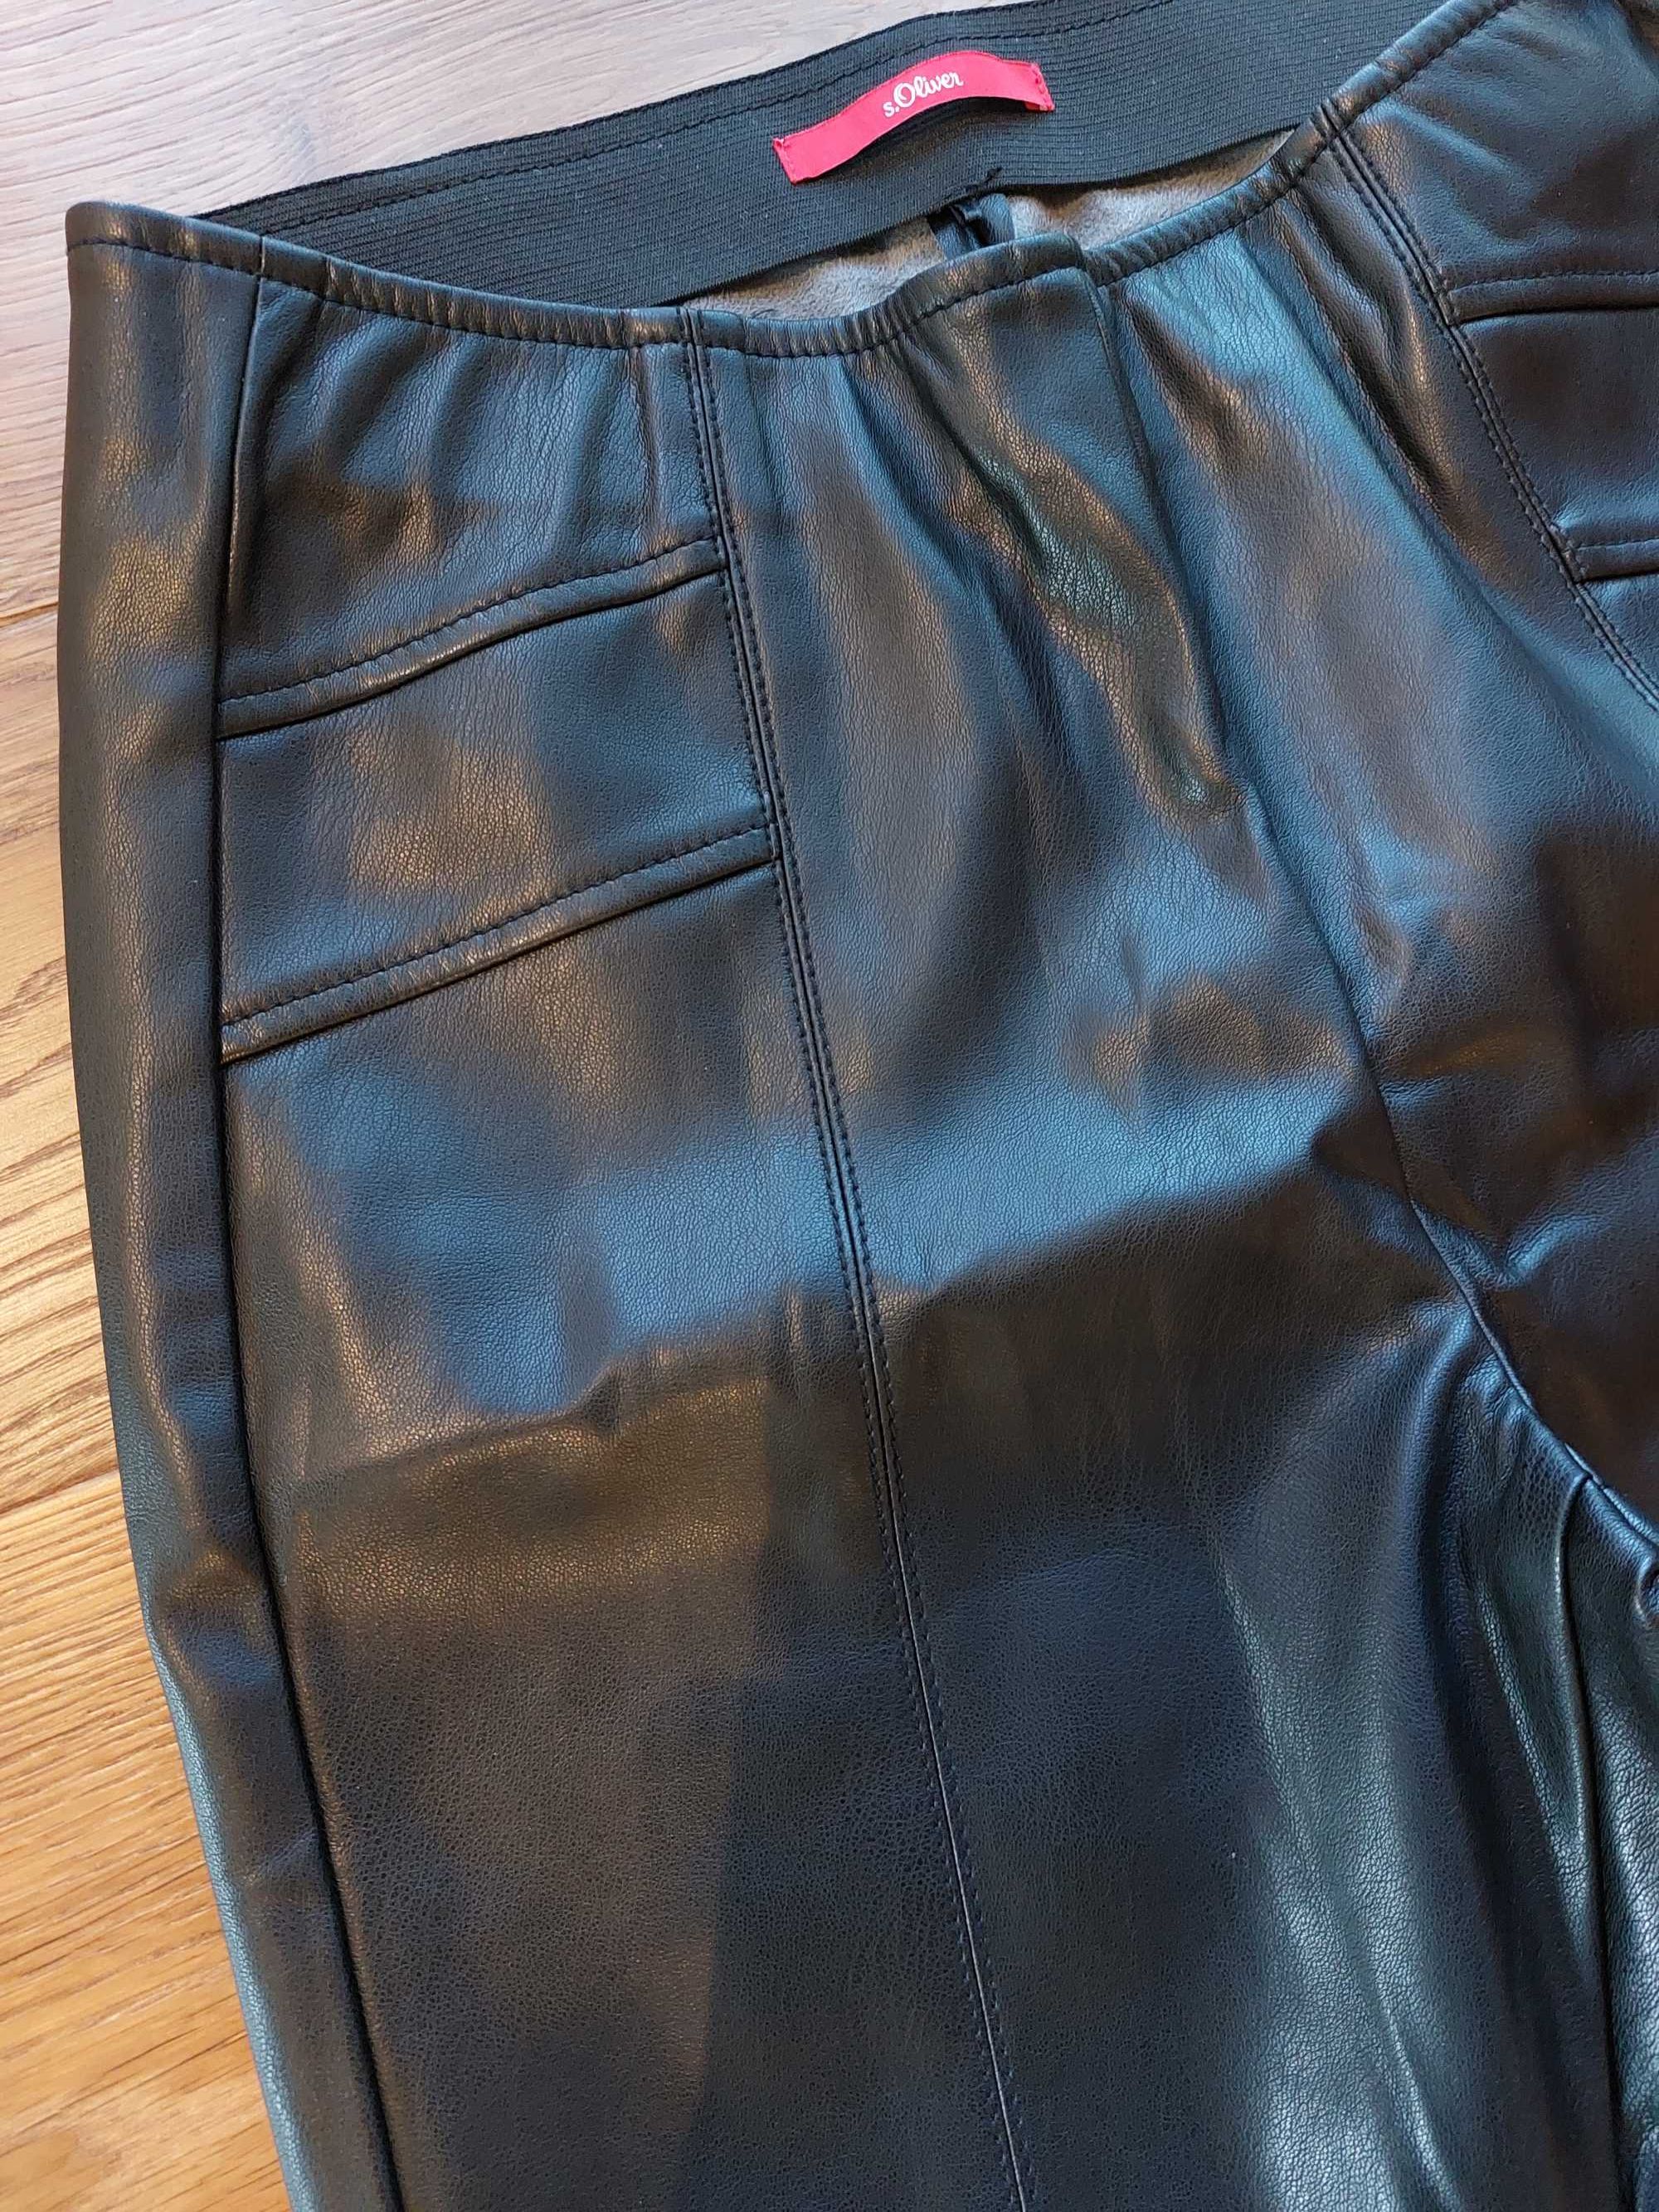 spodnie damskie,legginsy ekoskóra s.oliver black label nowe M